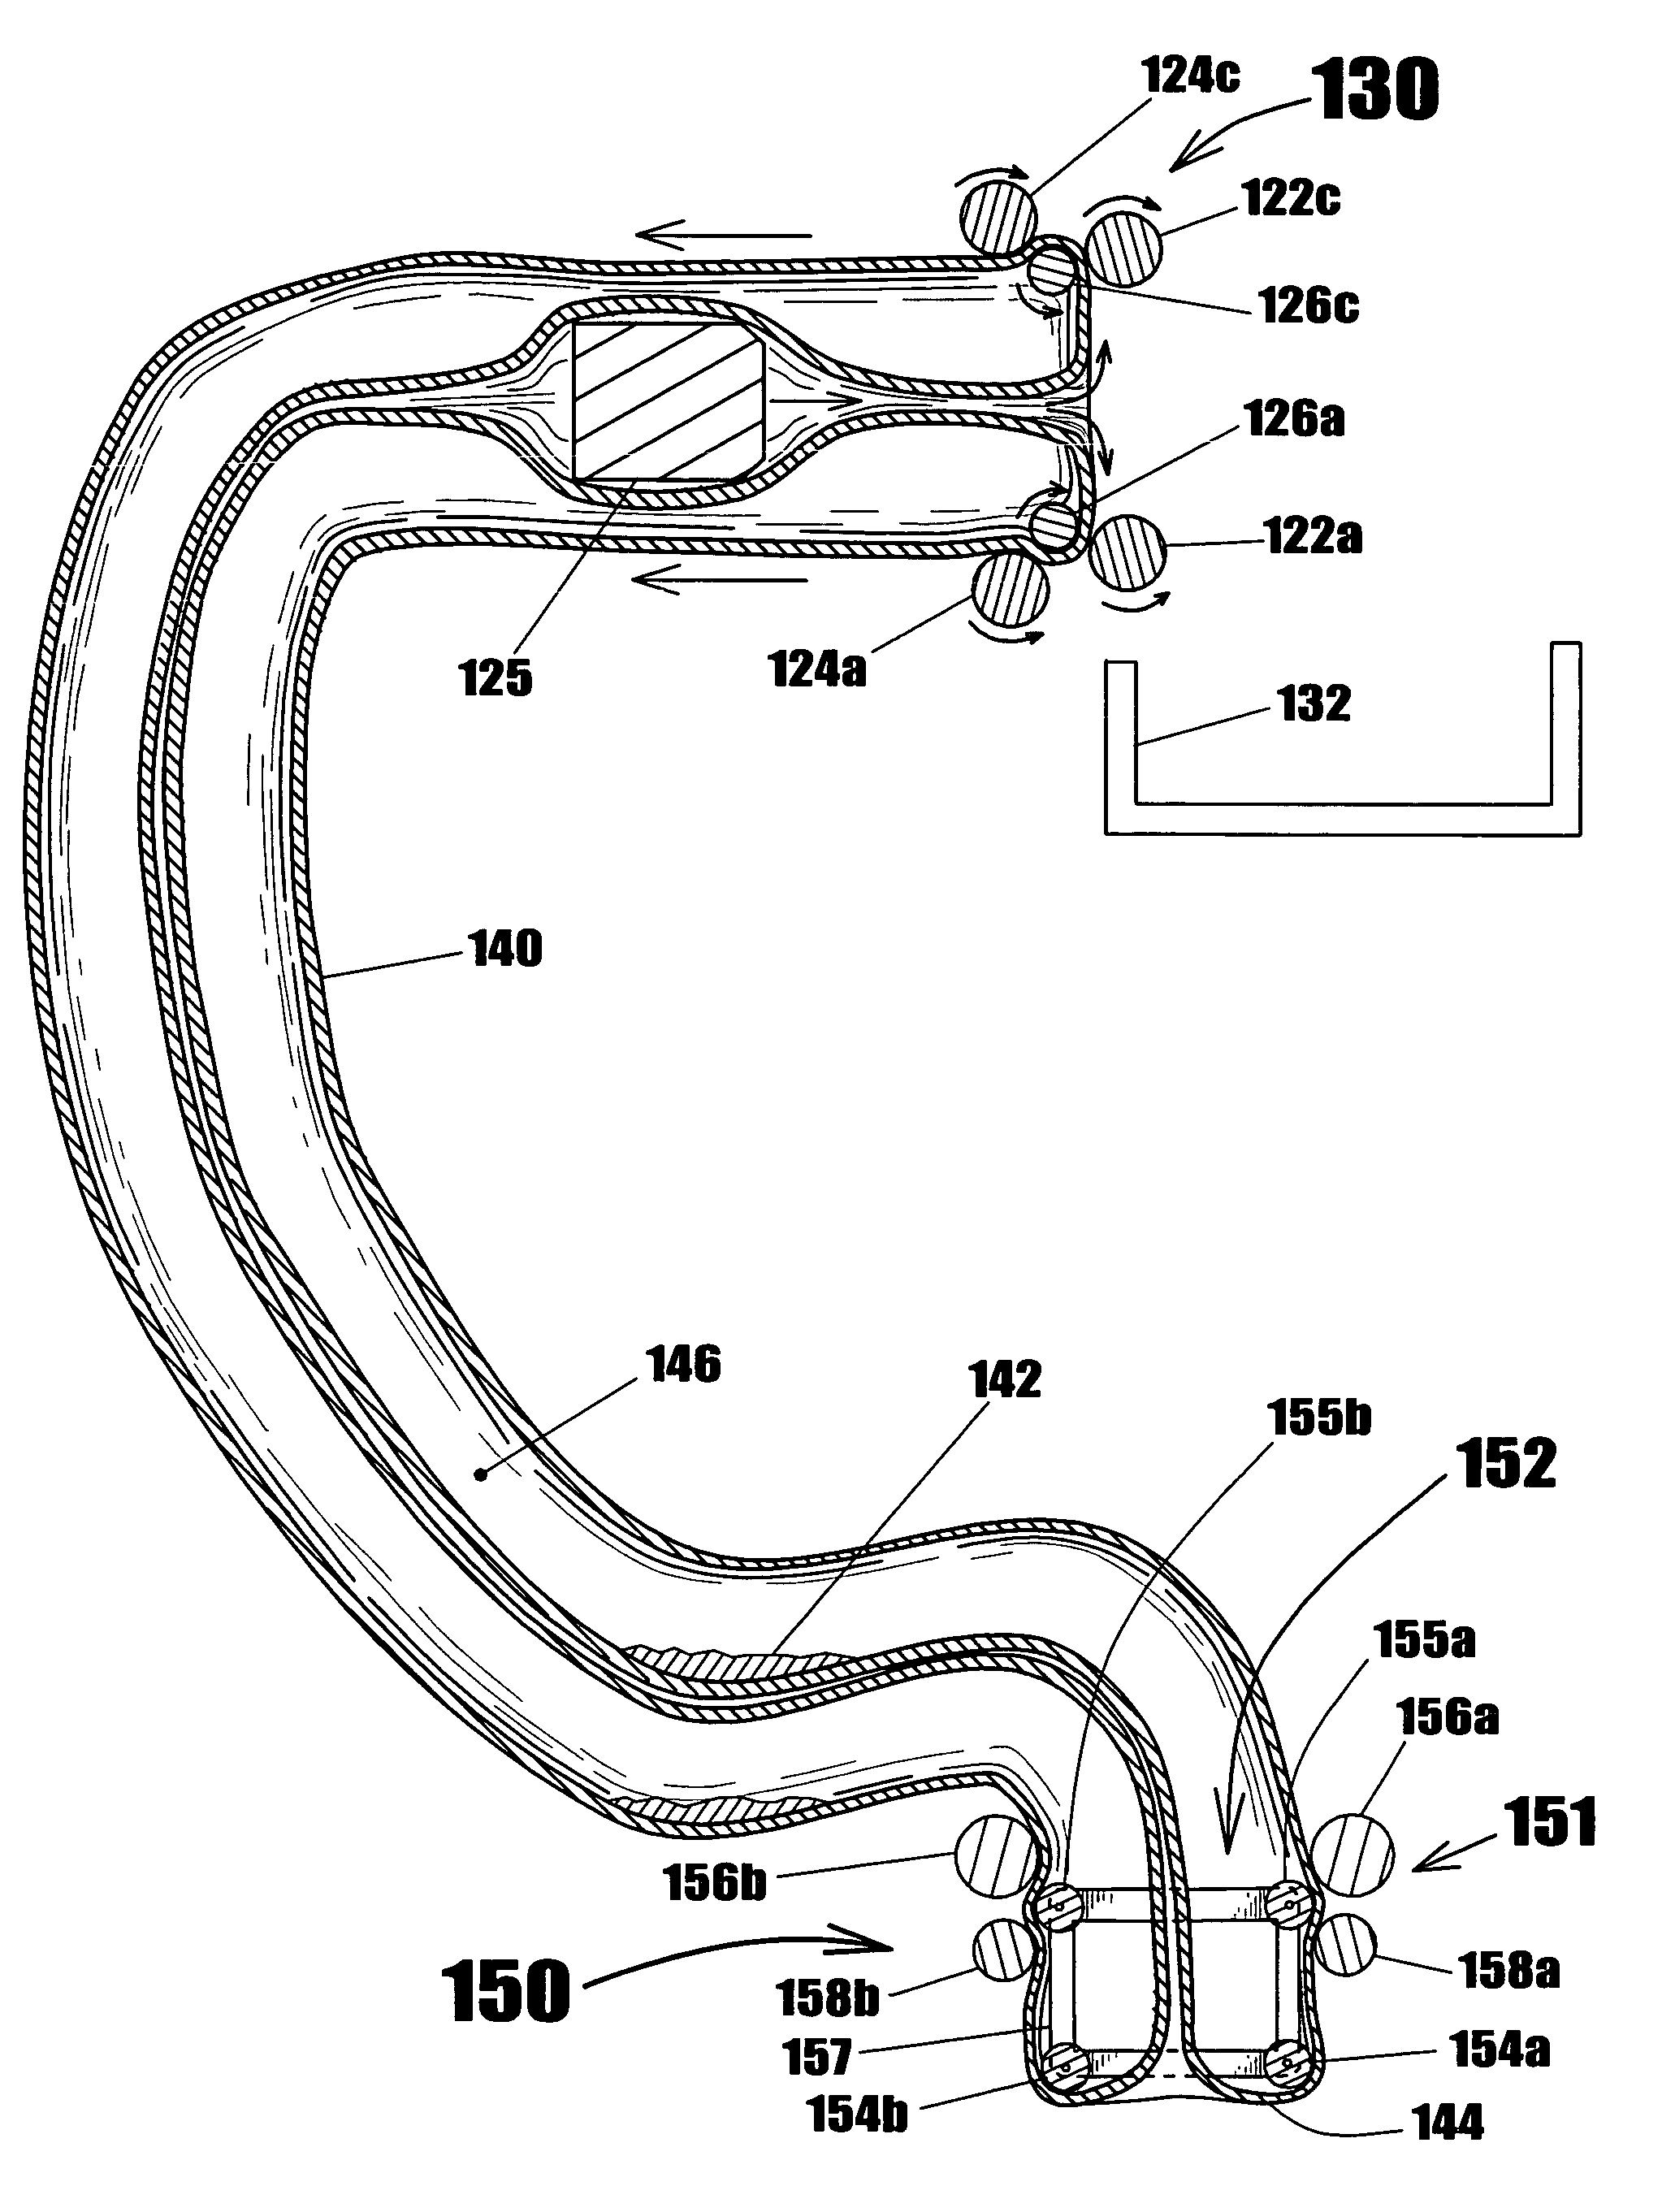 Torus-shaped conveyer and gripper